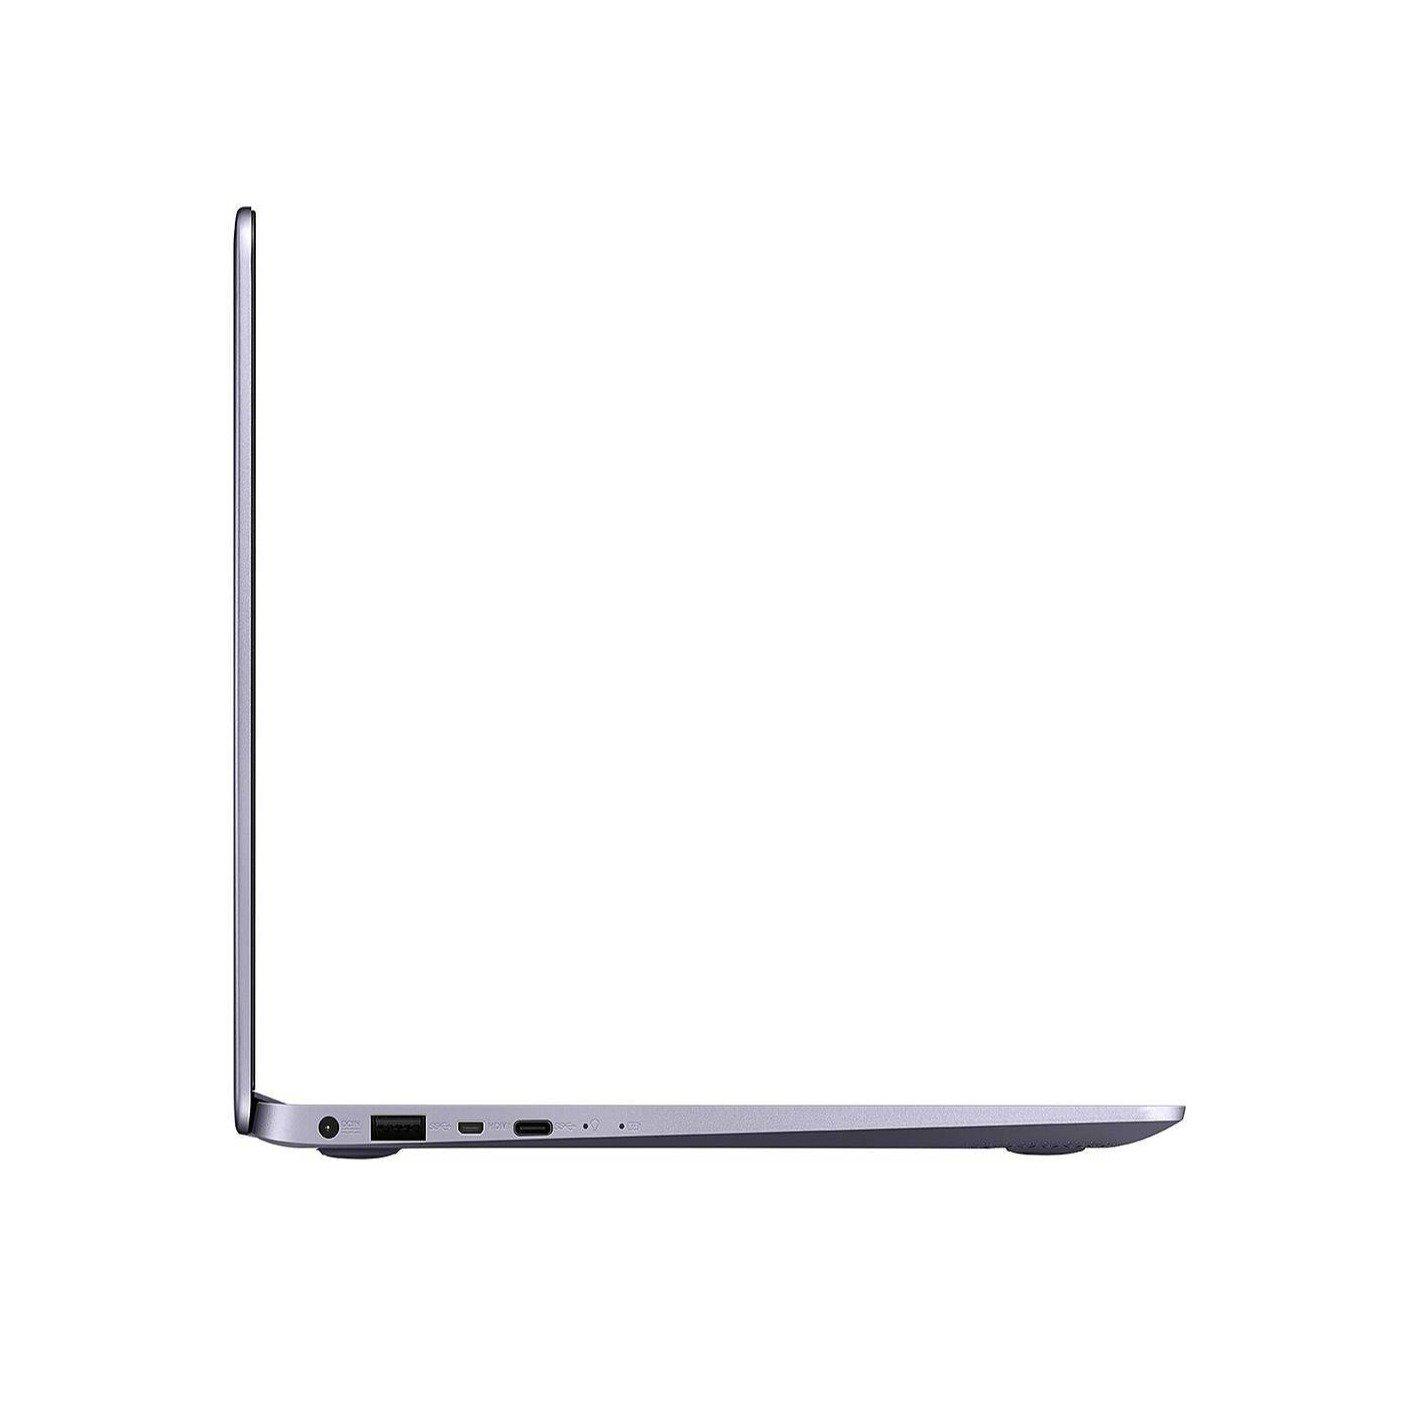 Asus VivoBook S14 S406U Laptop, Intel Core i5, 4GB RAM, 256GB SSD, 14.1”, Grey